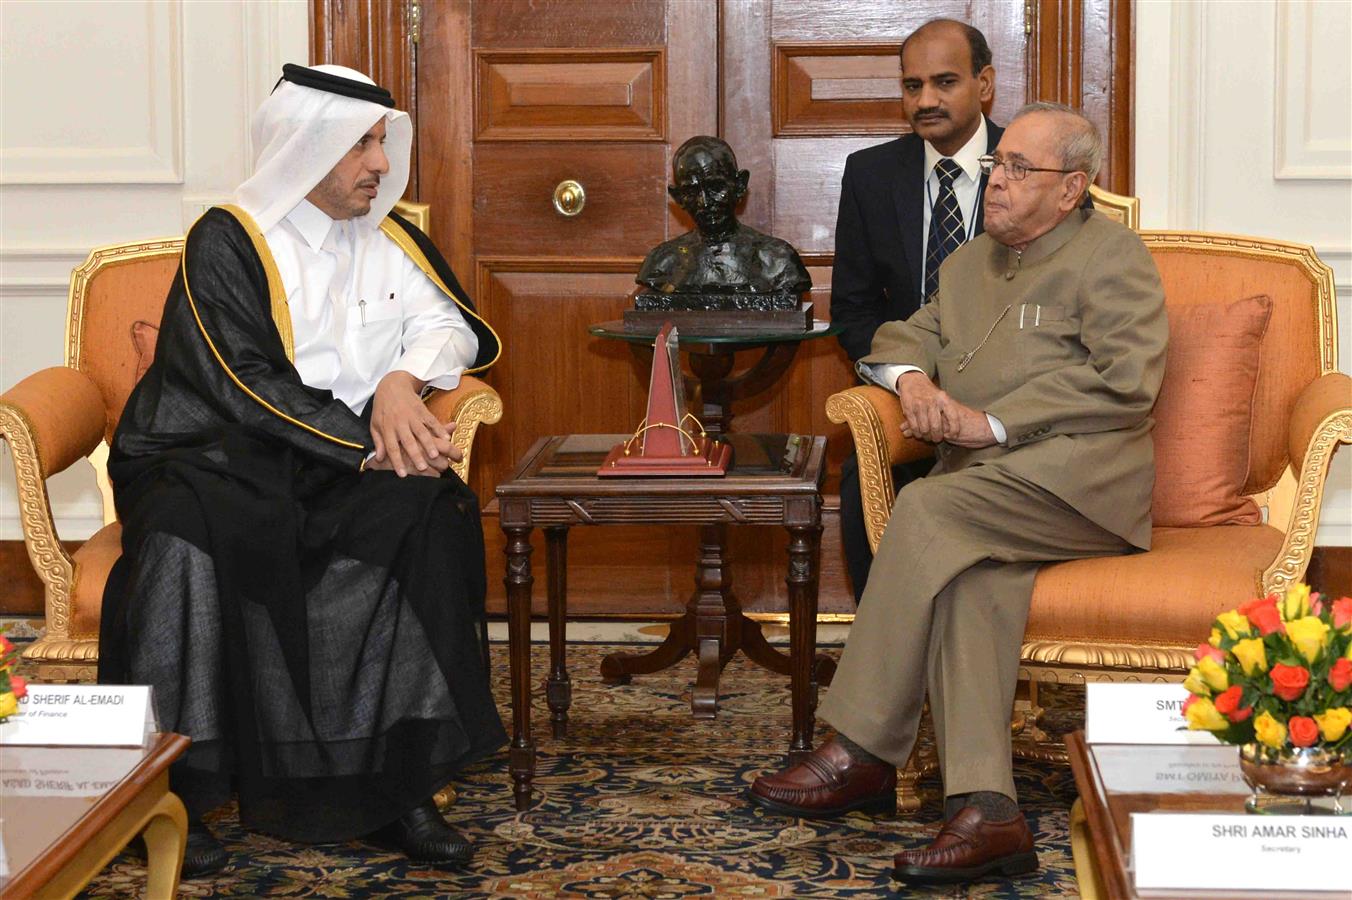 The Prime Minister and Minister of Interior State of Qatar, H.E. Sheikh Abdullah Bin Nasser Bin Khalifa Al Thani calling on the President of India, Shri Pranab Mukherjee at Rashtrapati Bhavan on on December 3, 2016.